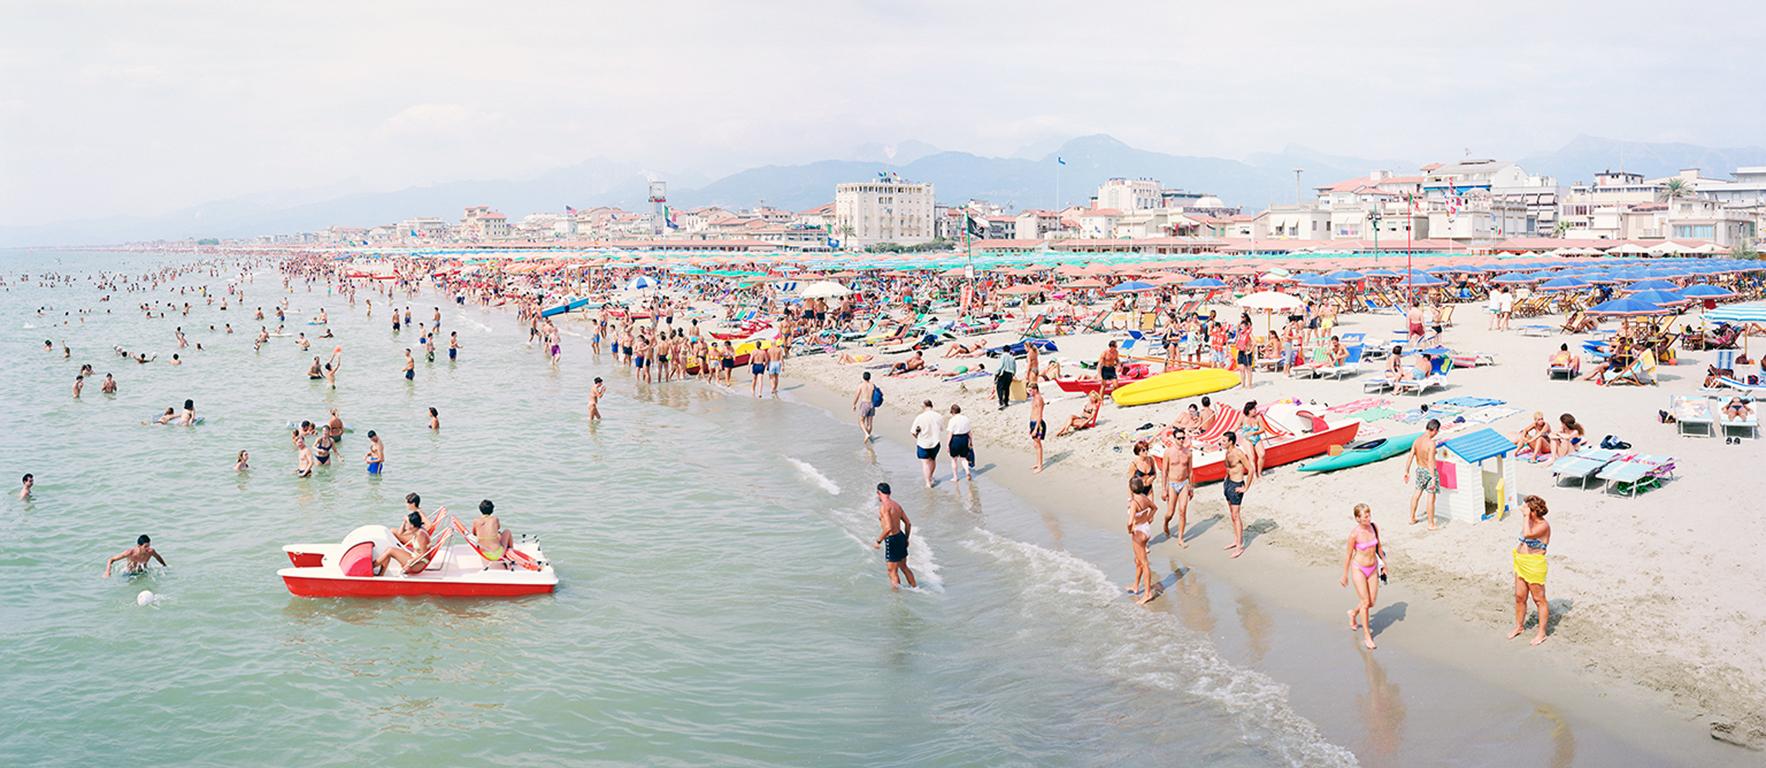 Viareggio Pano (artist framed) - large scale panorama of Mediterranean beach 